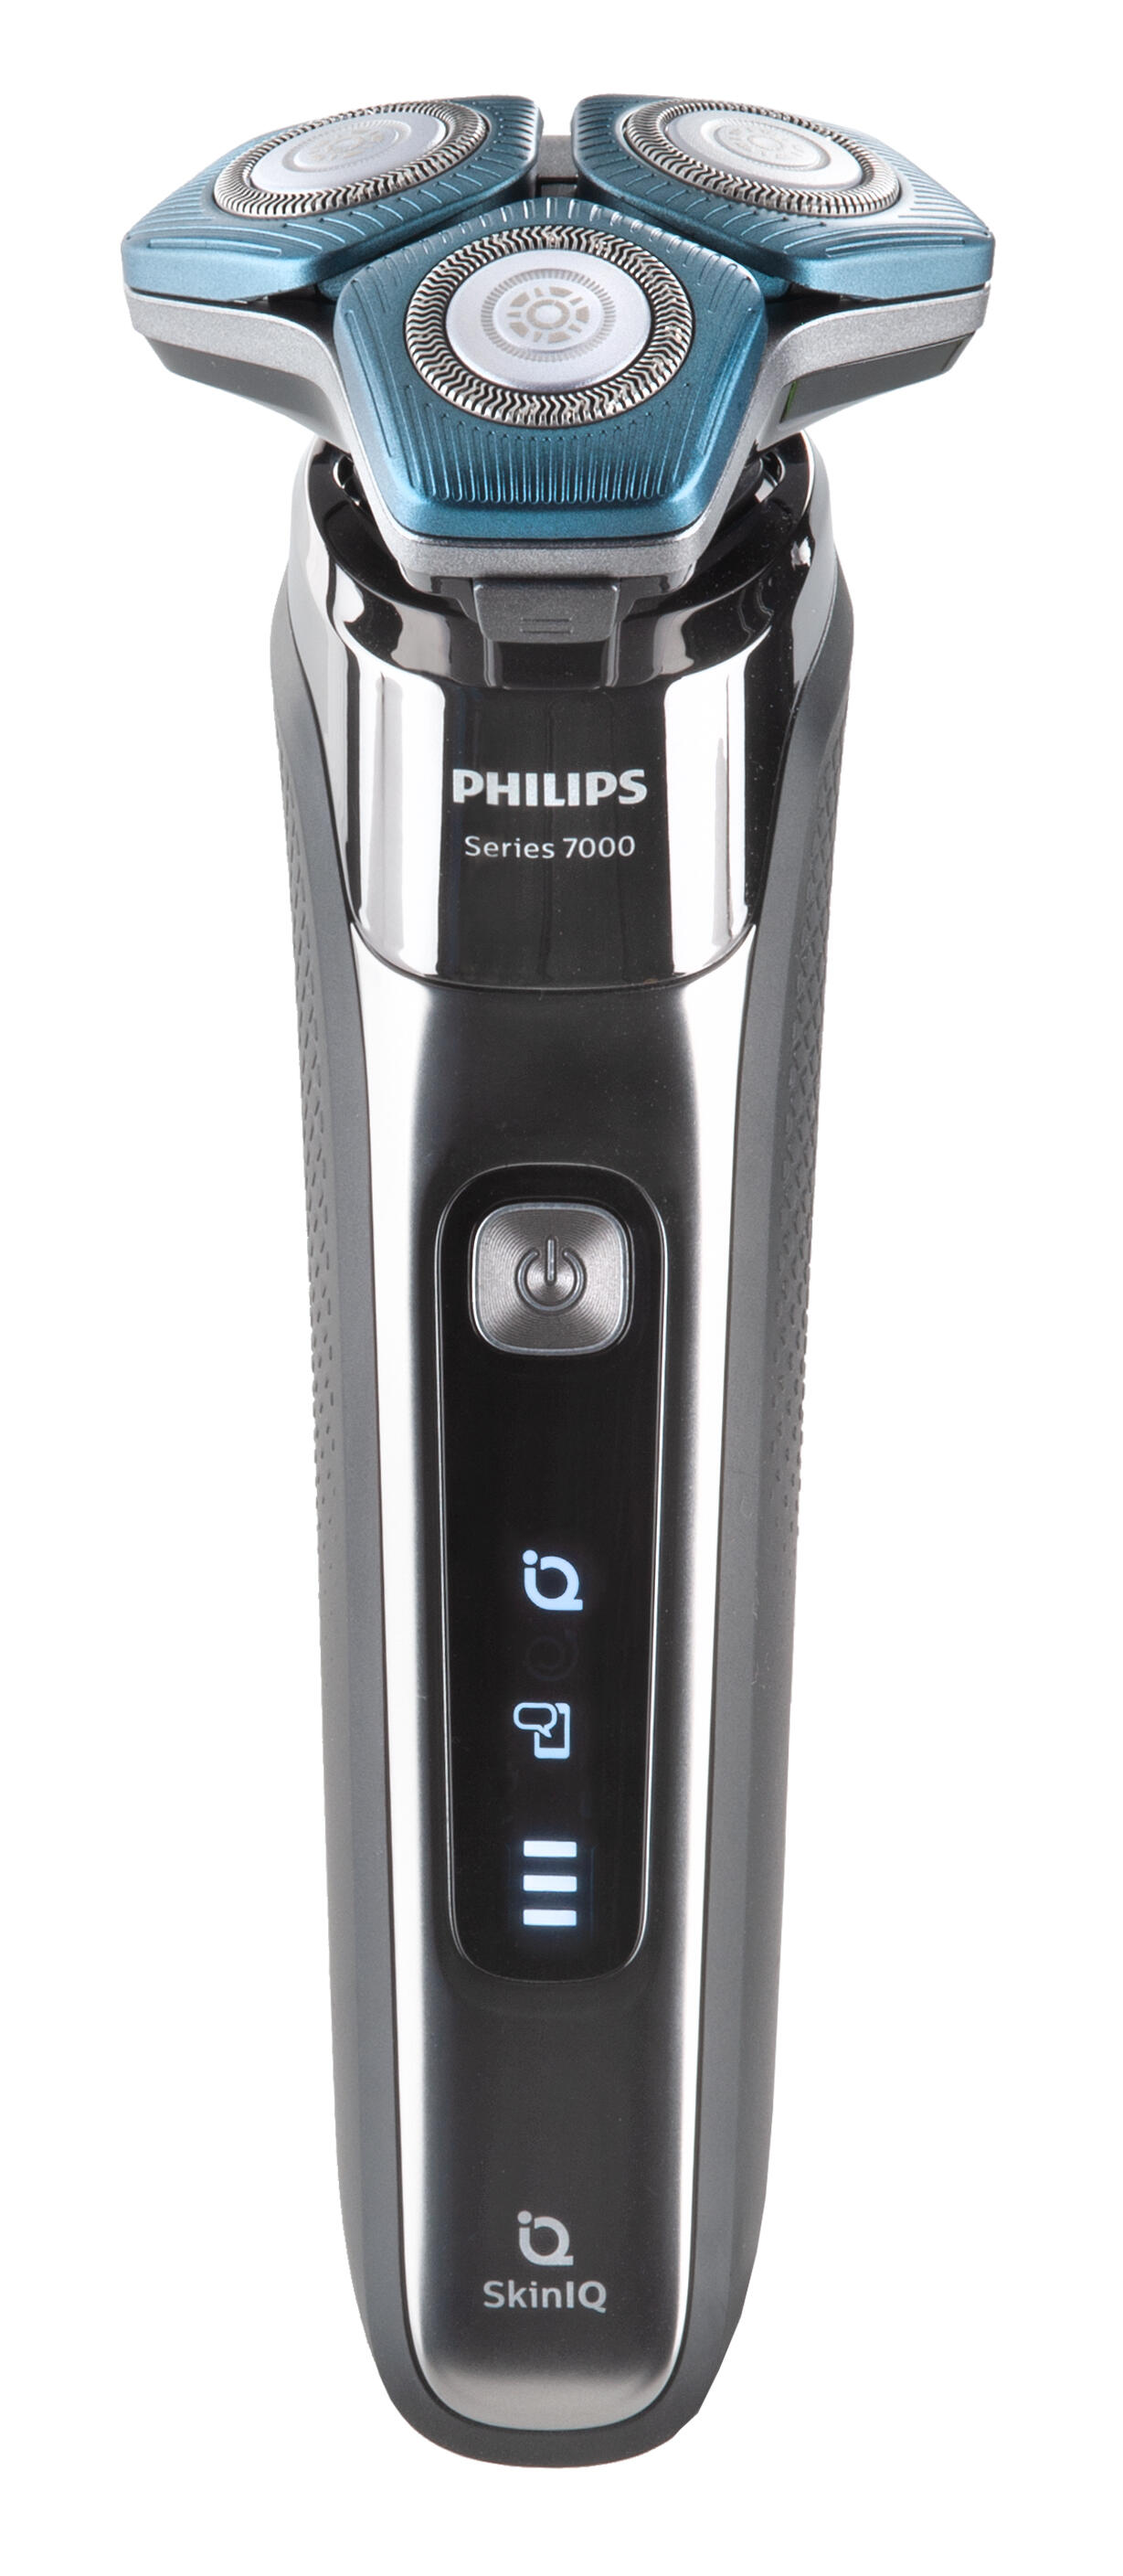 Series 7000 S7782/50 Philips